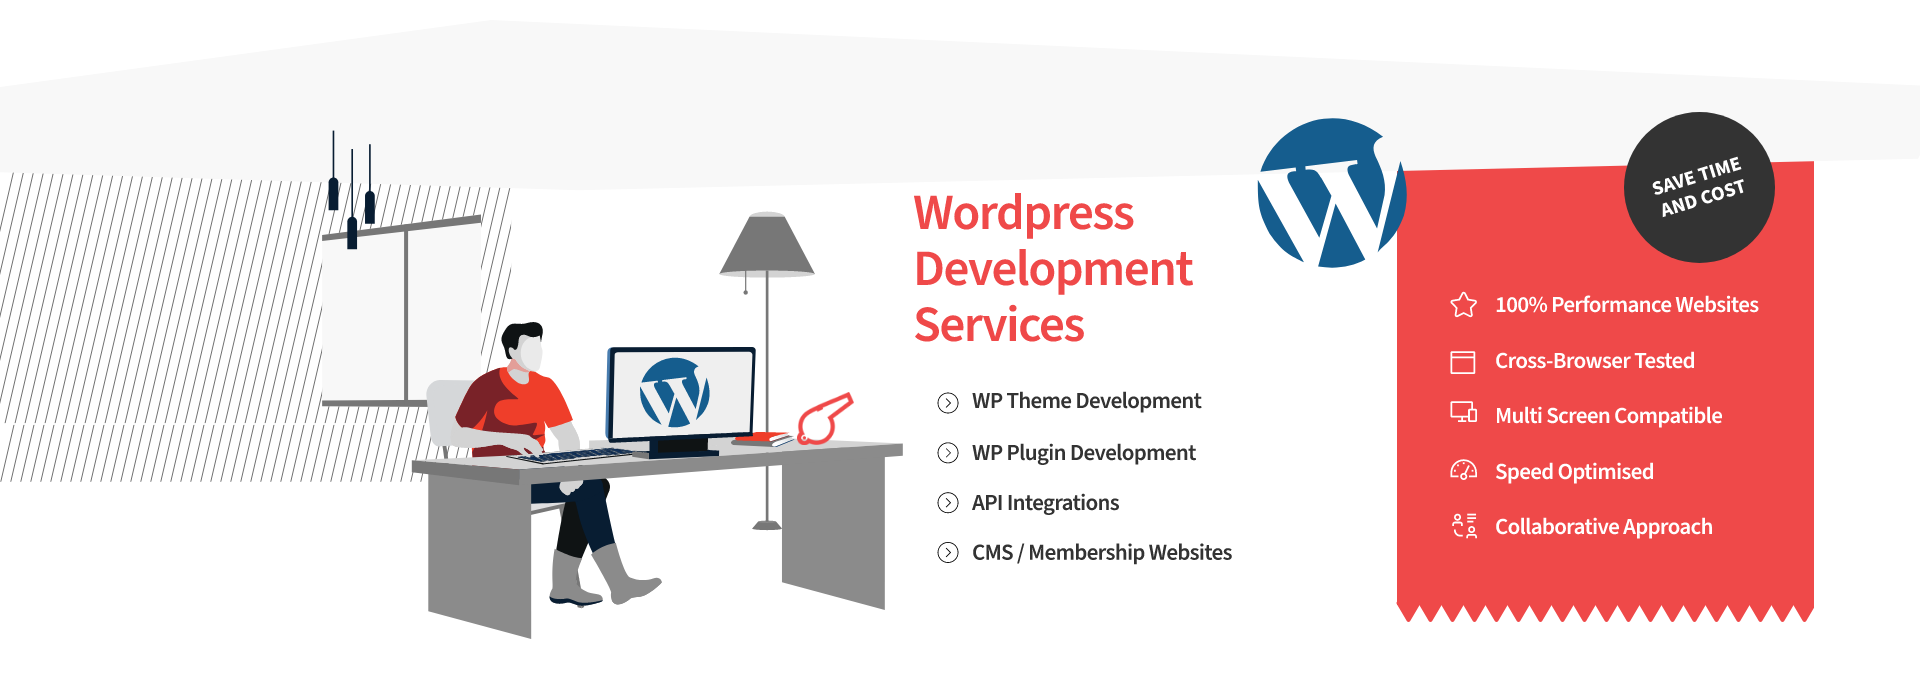 WordPress Website Development Services  Company - ColorWhistle